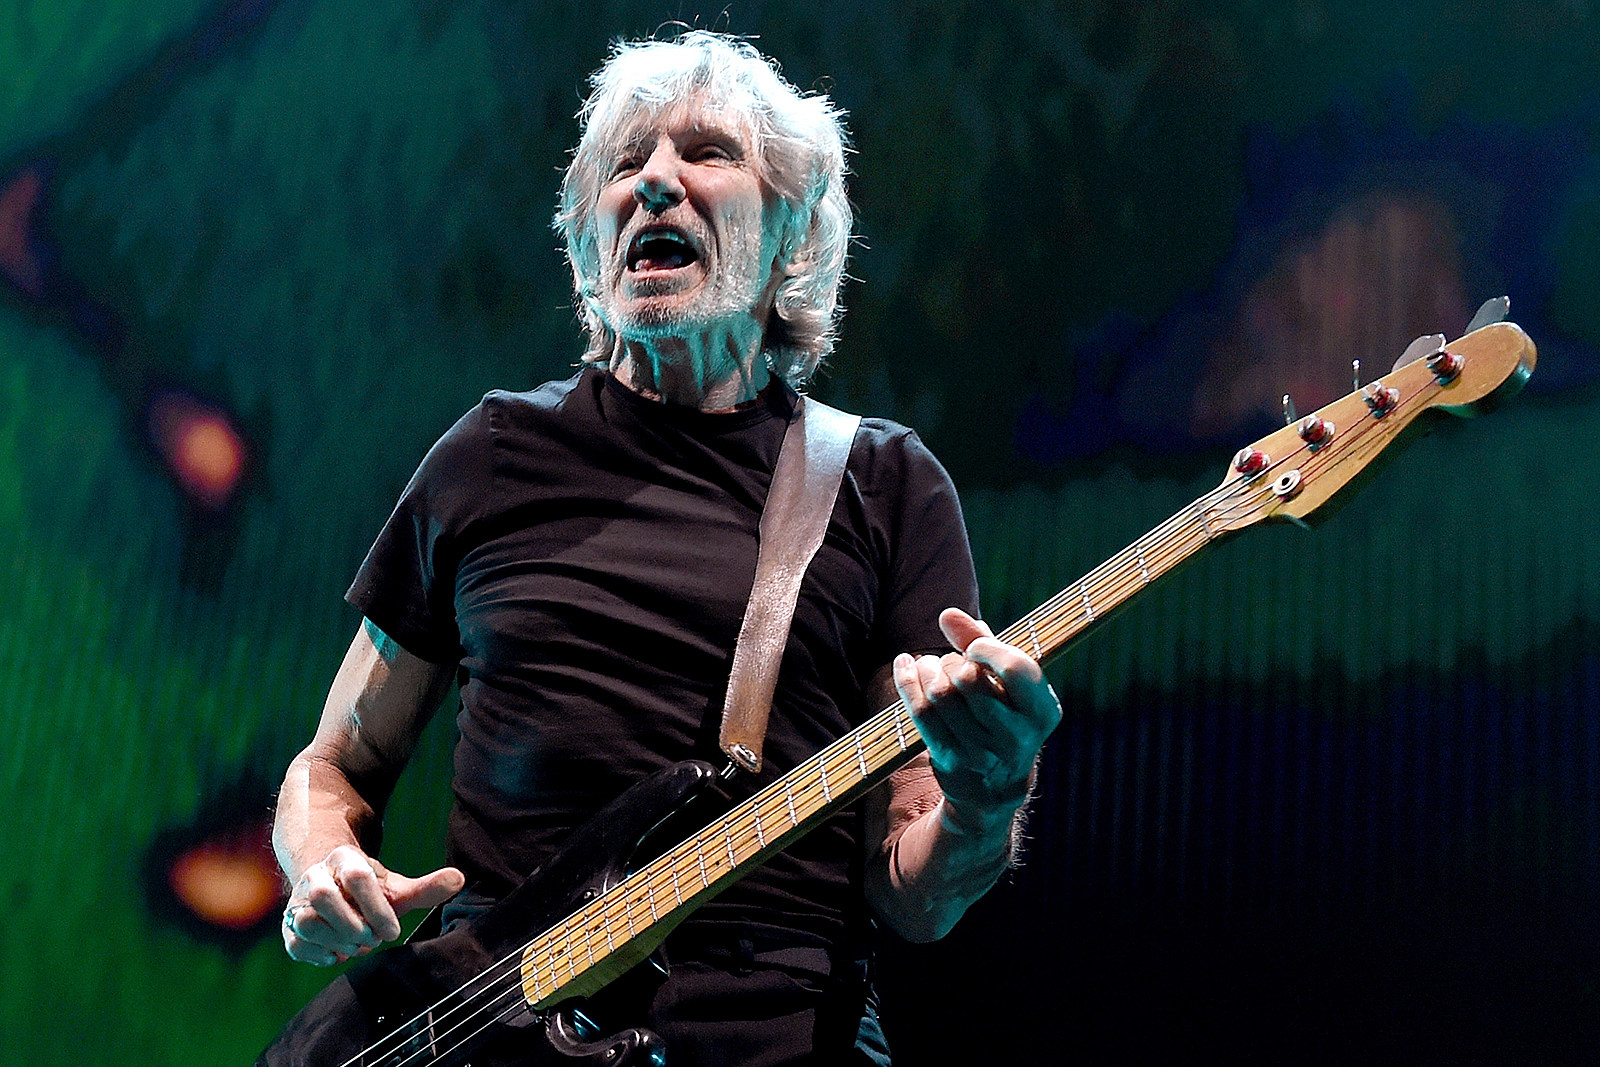 Roger Waters ‘Going to Frankfurt’ Regardless of Legal Dispute